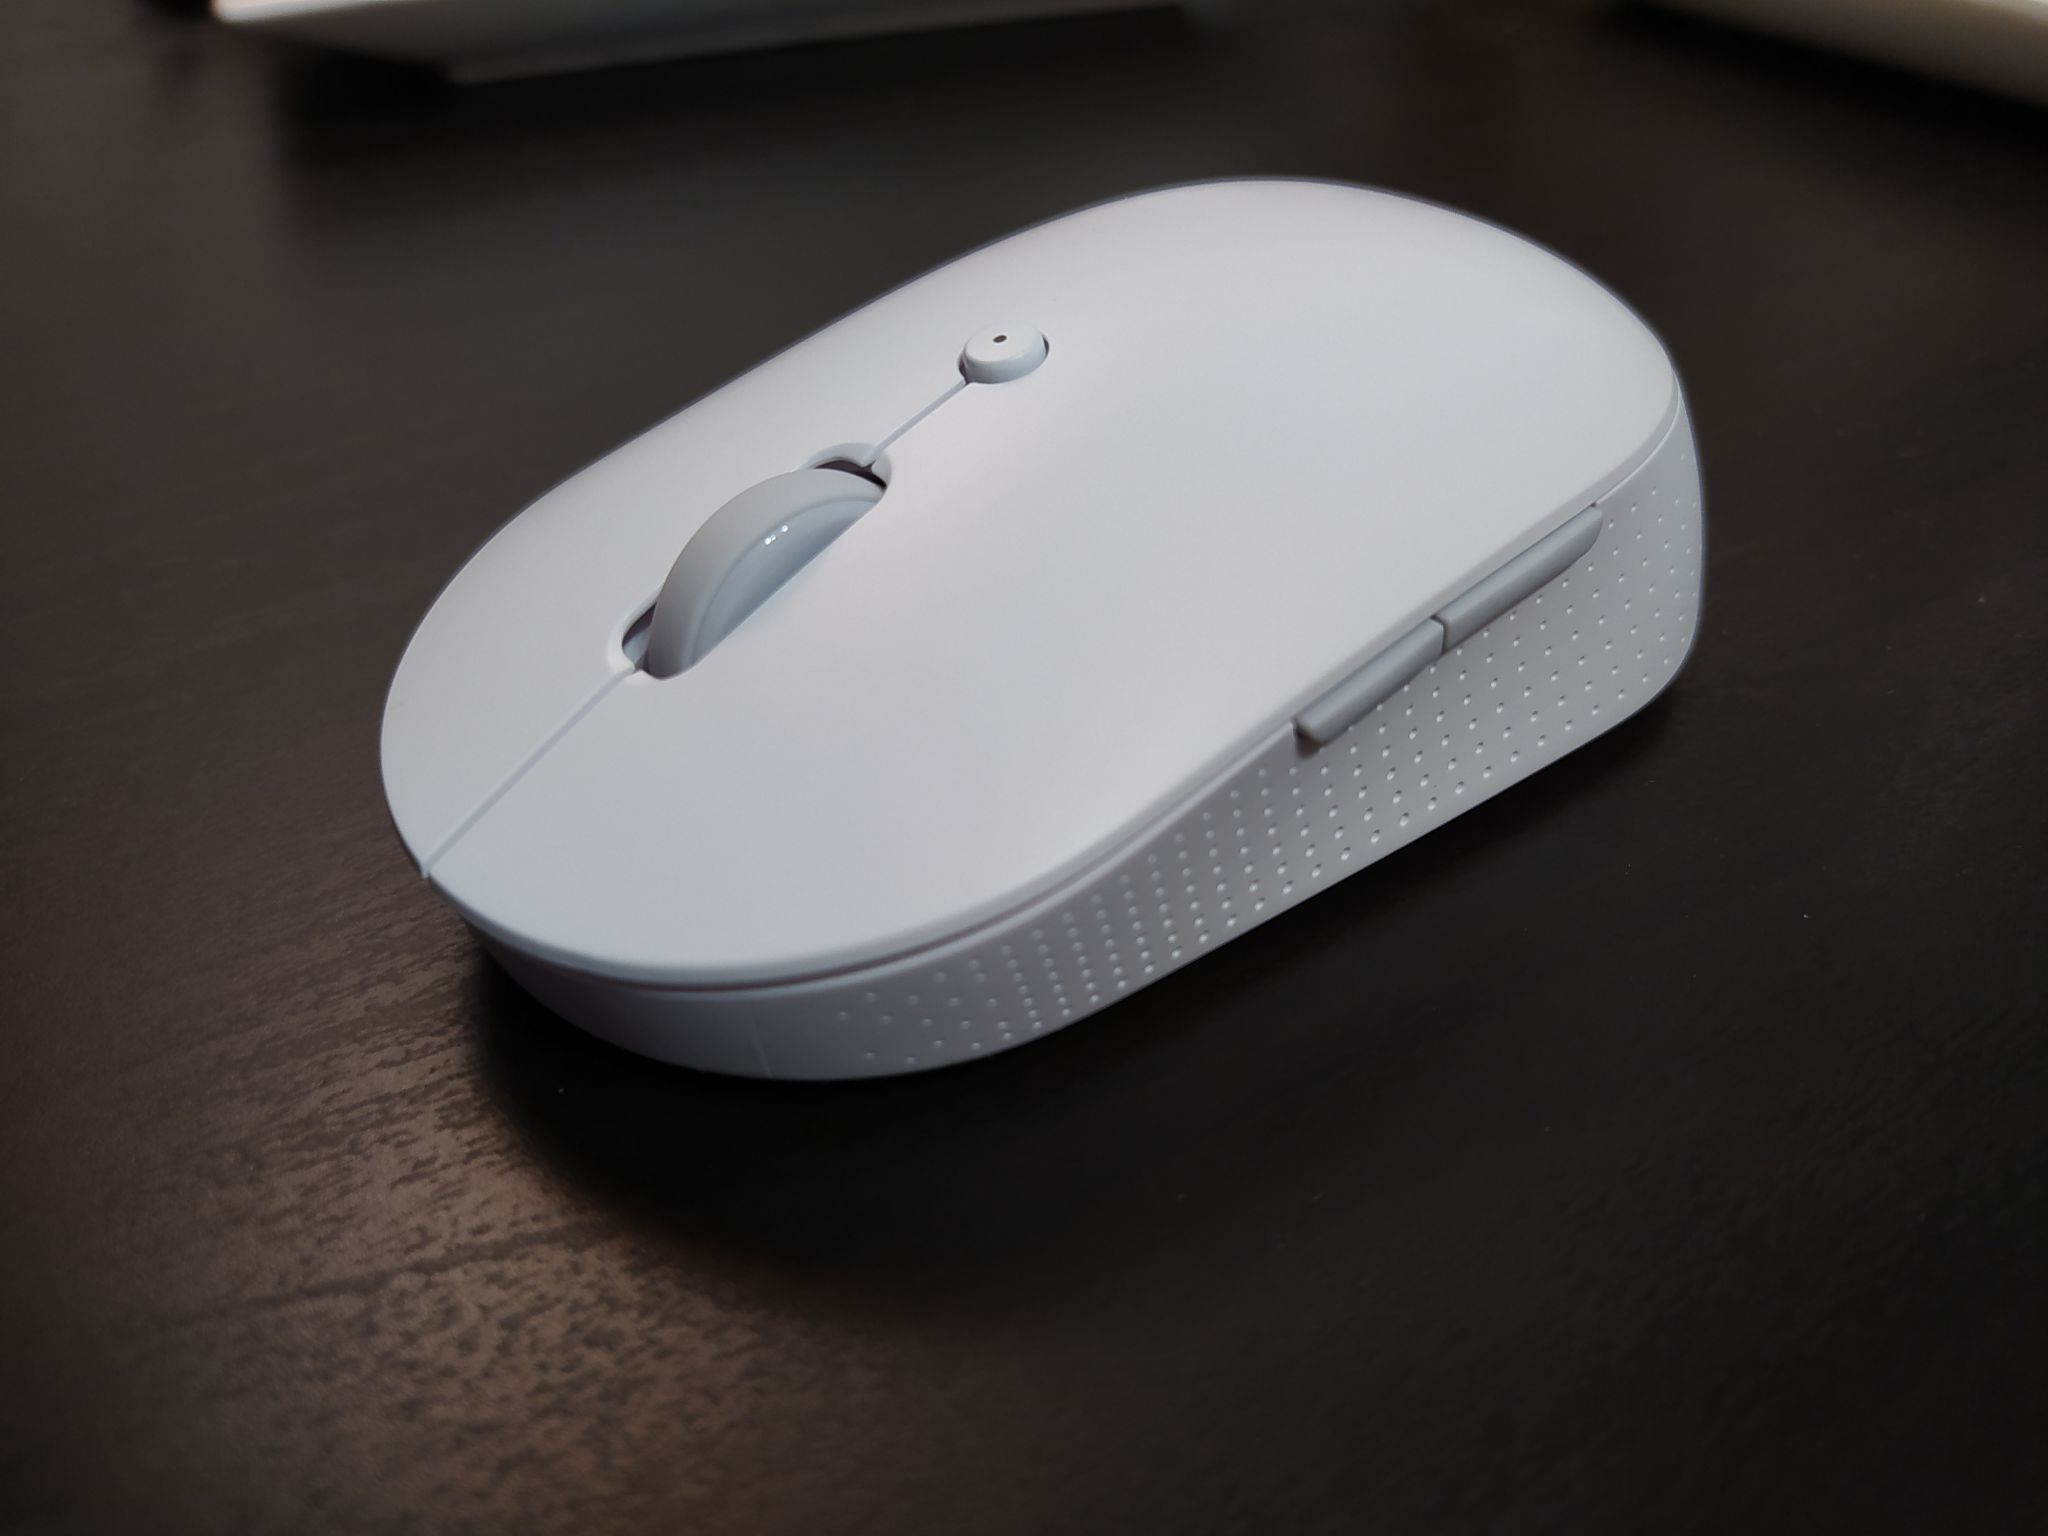 Мышь xiaomi mouse silent edition. Xiaomi mi Dual Mode Wireless Mouse Silent Edition (White) беспроводная мышь [hlk4040gl]. Мышь Xiaomi mi hlk4040gl. Драйвера мышь Xiaomi mi Wireless Mouse. Мышь Xiaomi mi Dual Mode Silent Edition для Mac Apple.